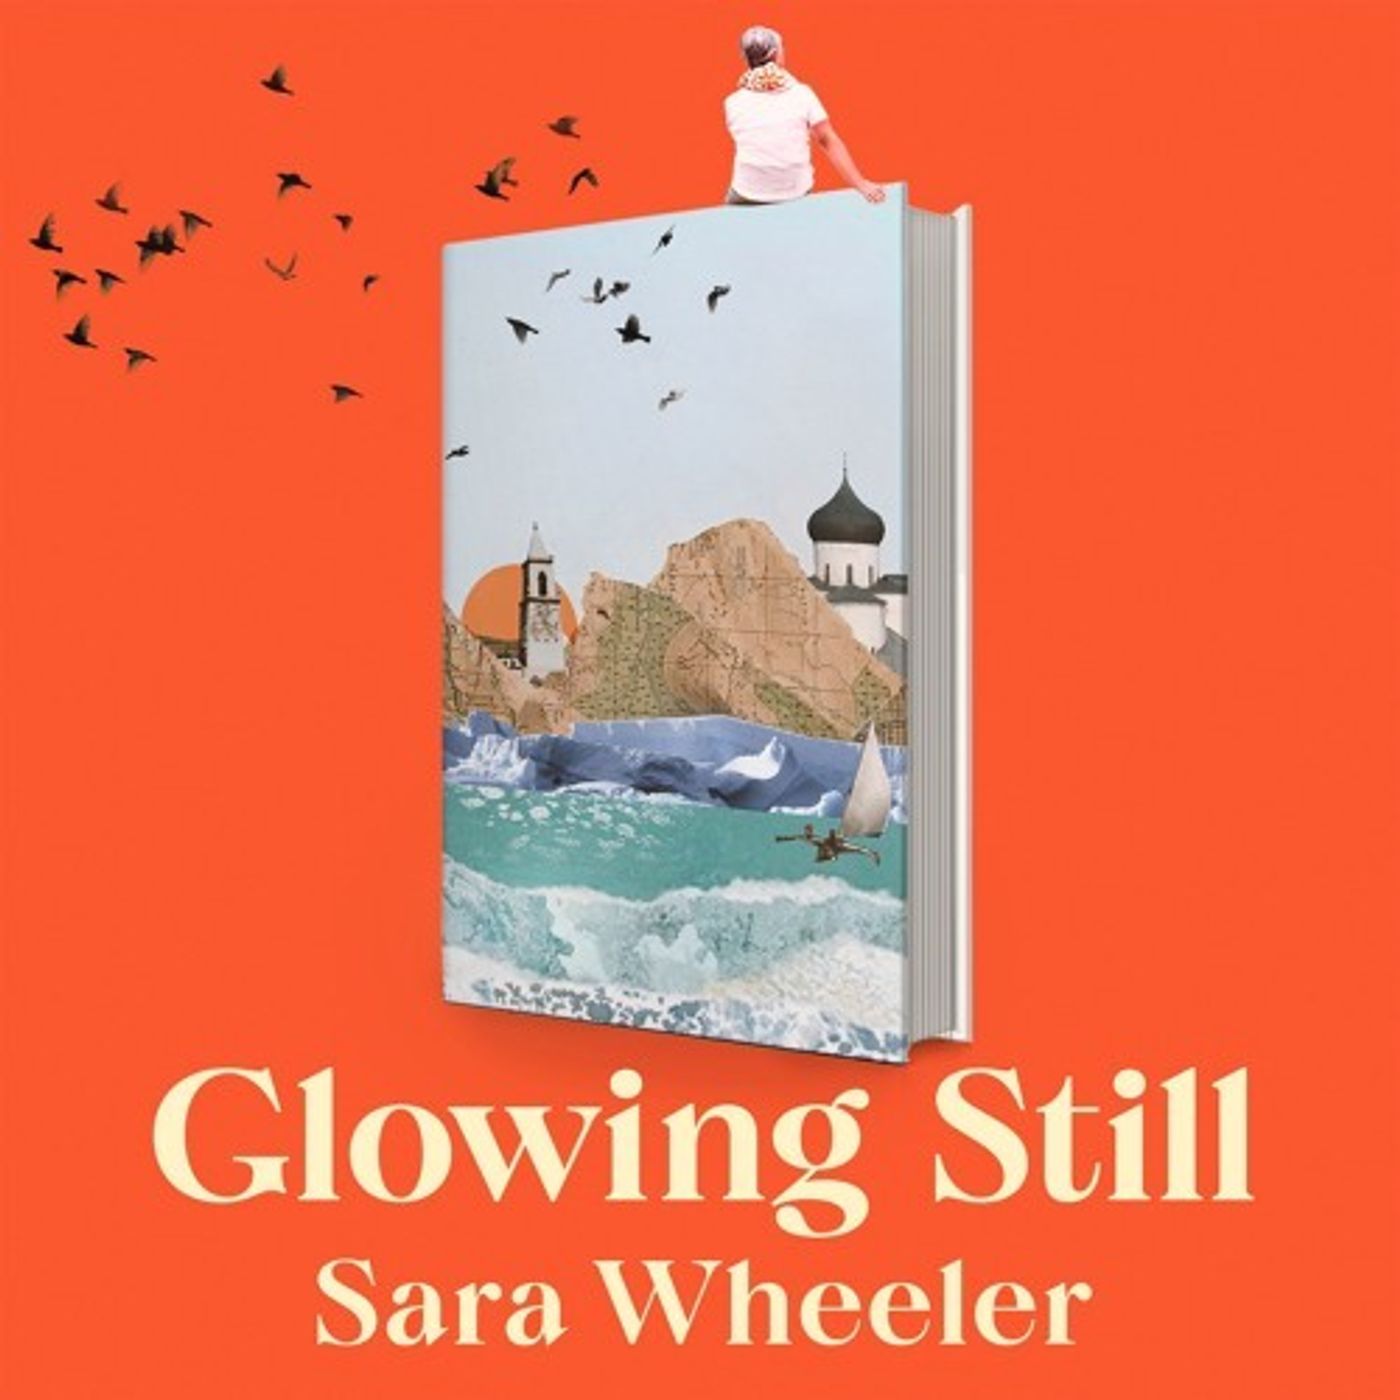 Sara Wheeler: Glowing Still